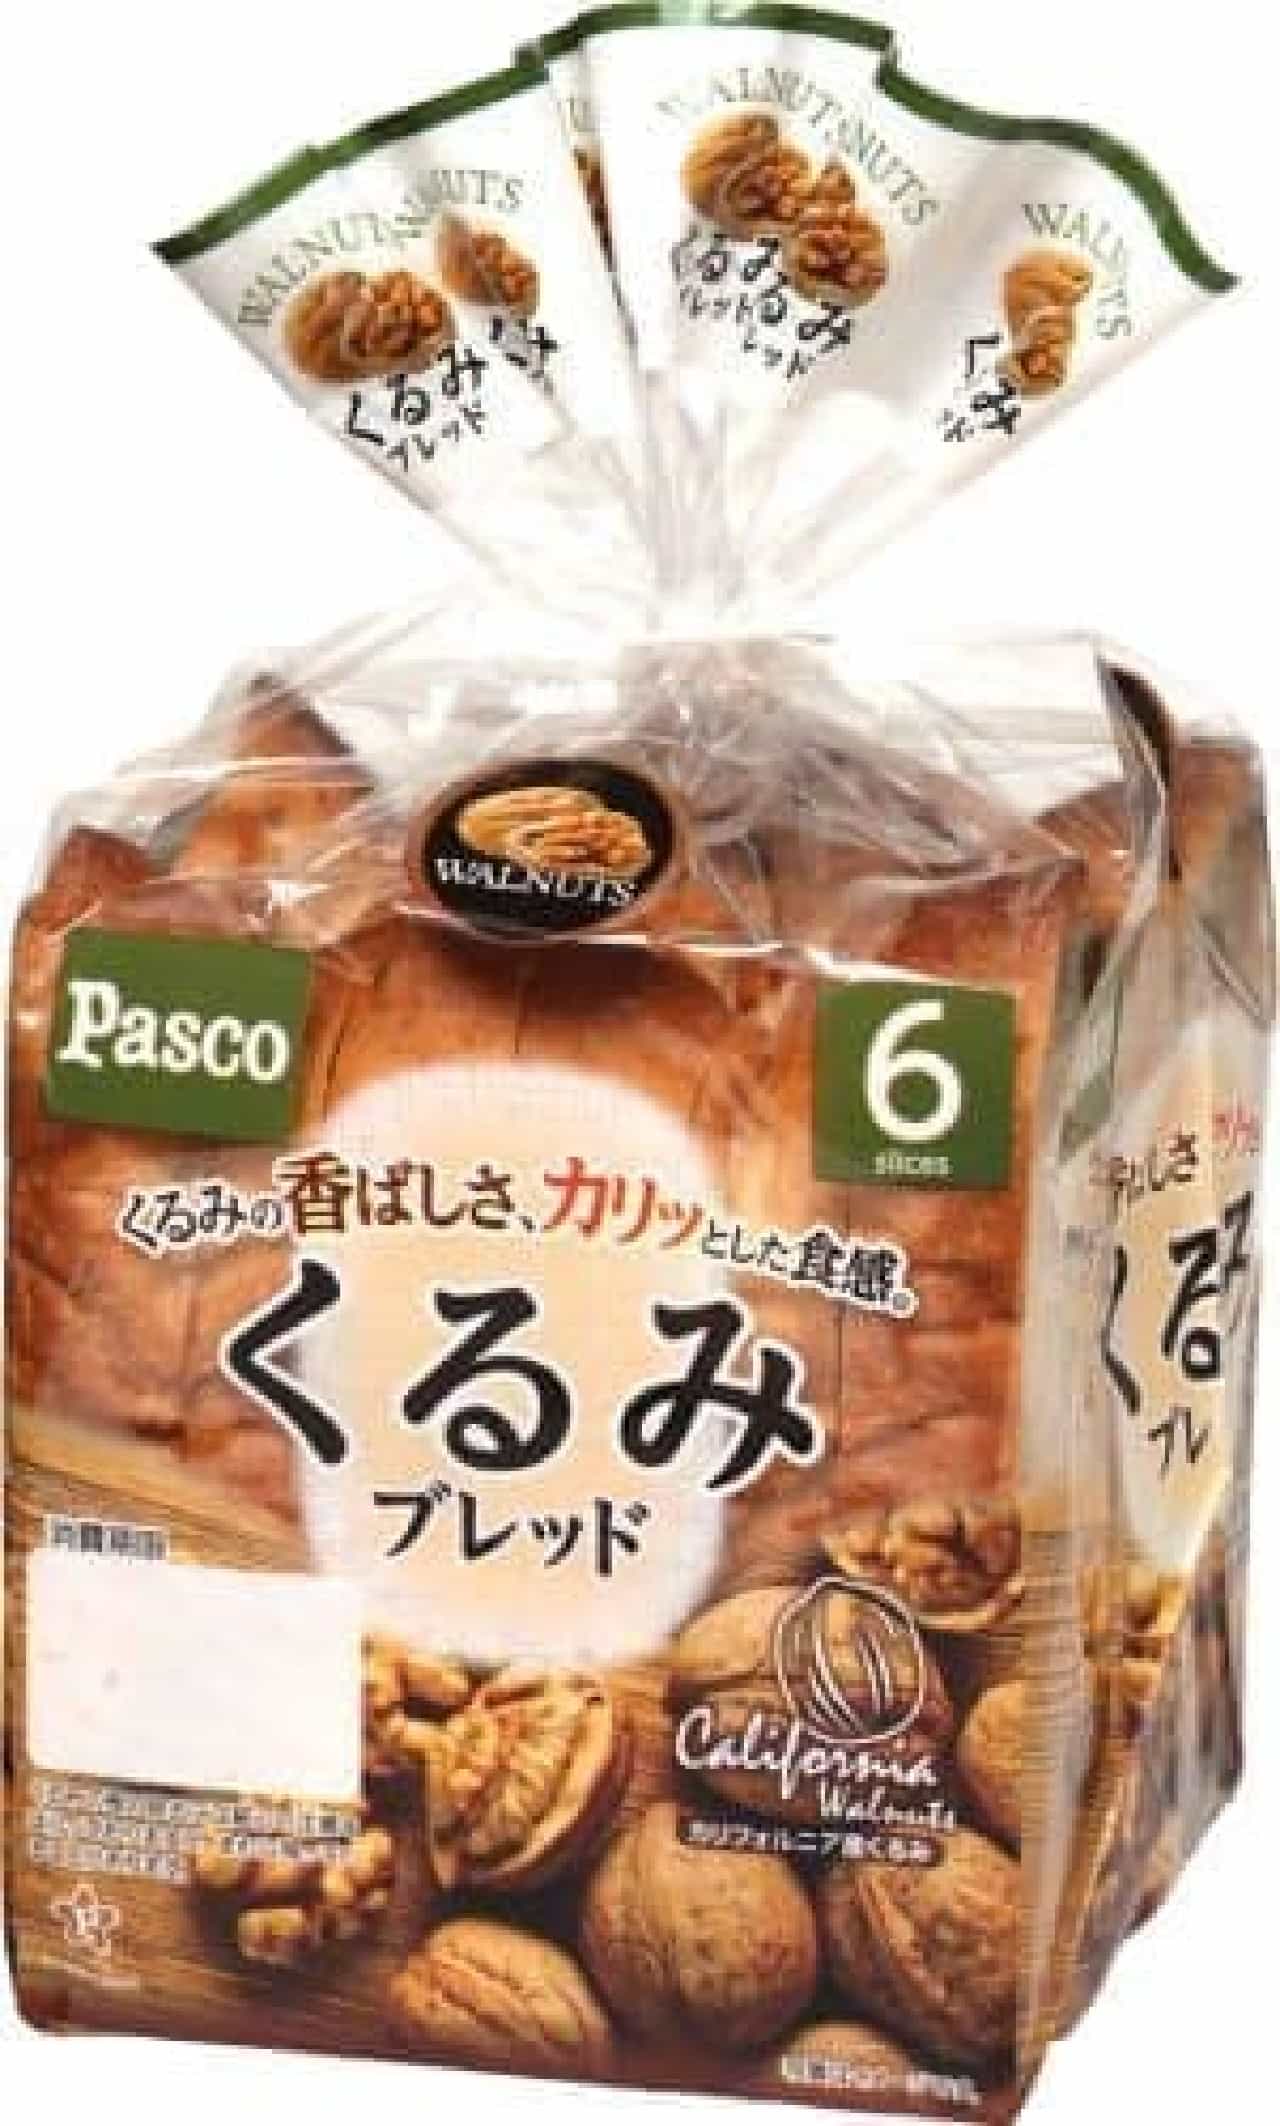 Pasco walnut bread